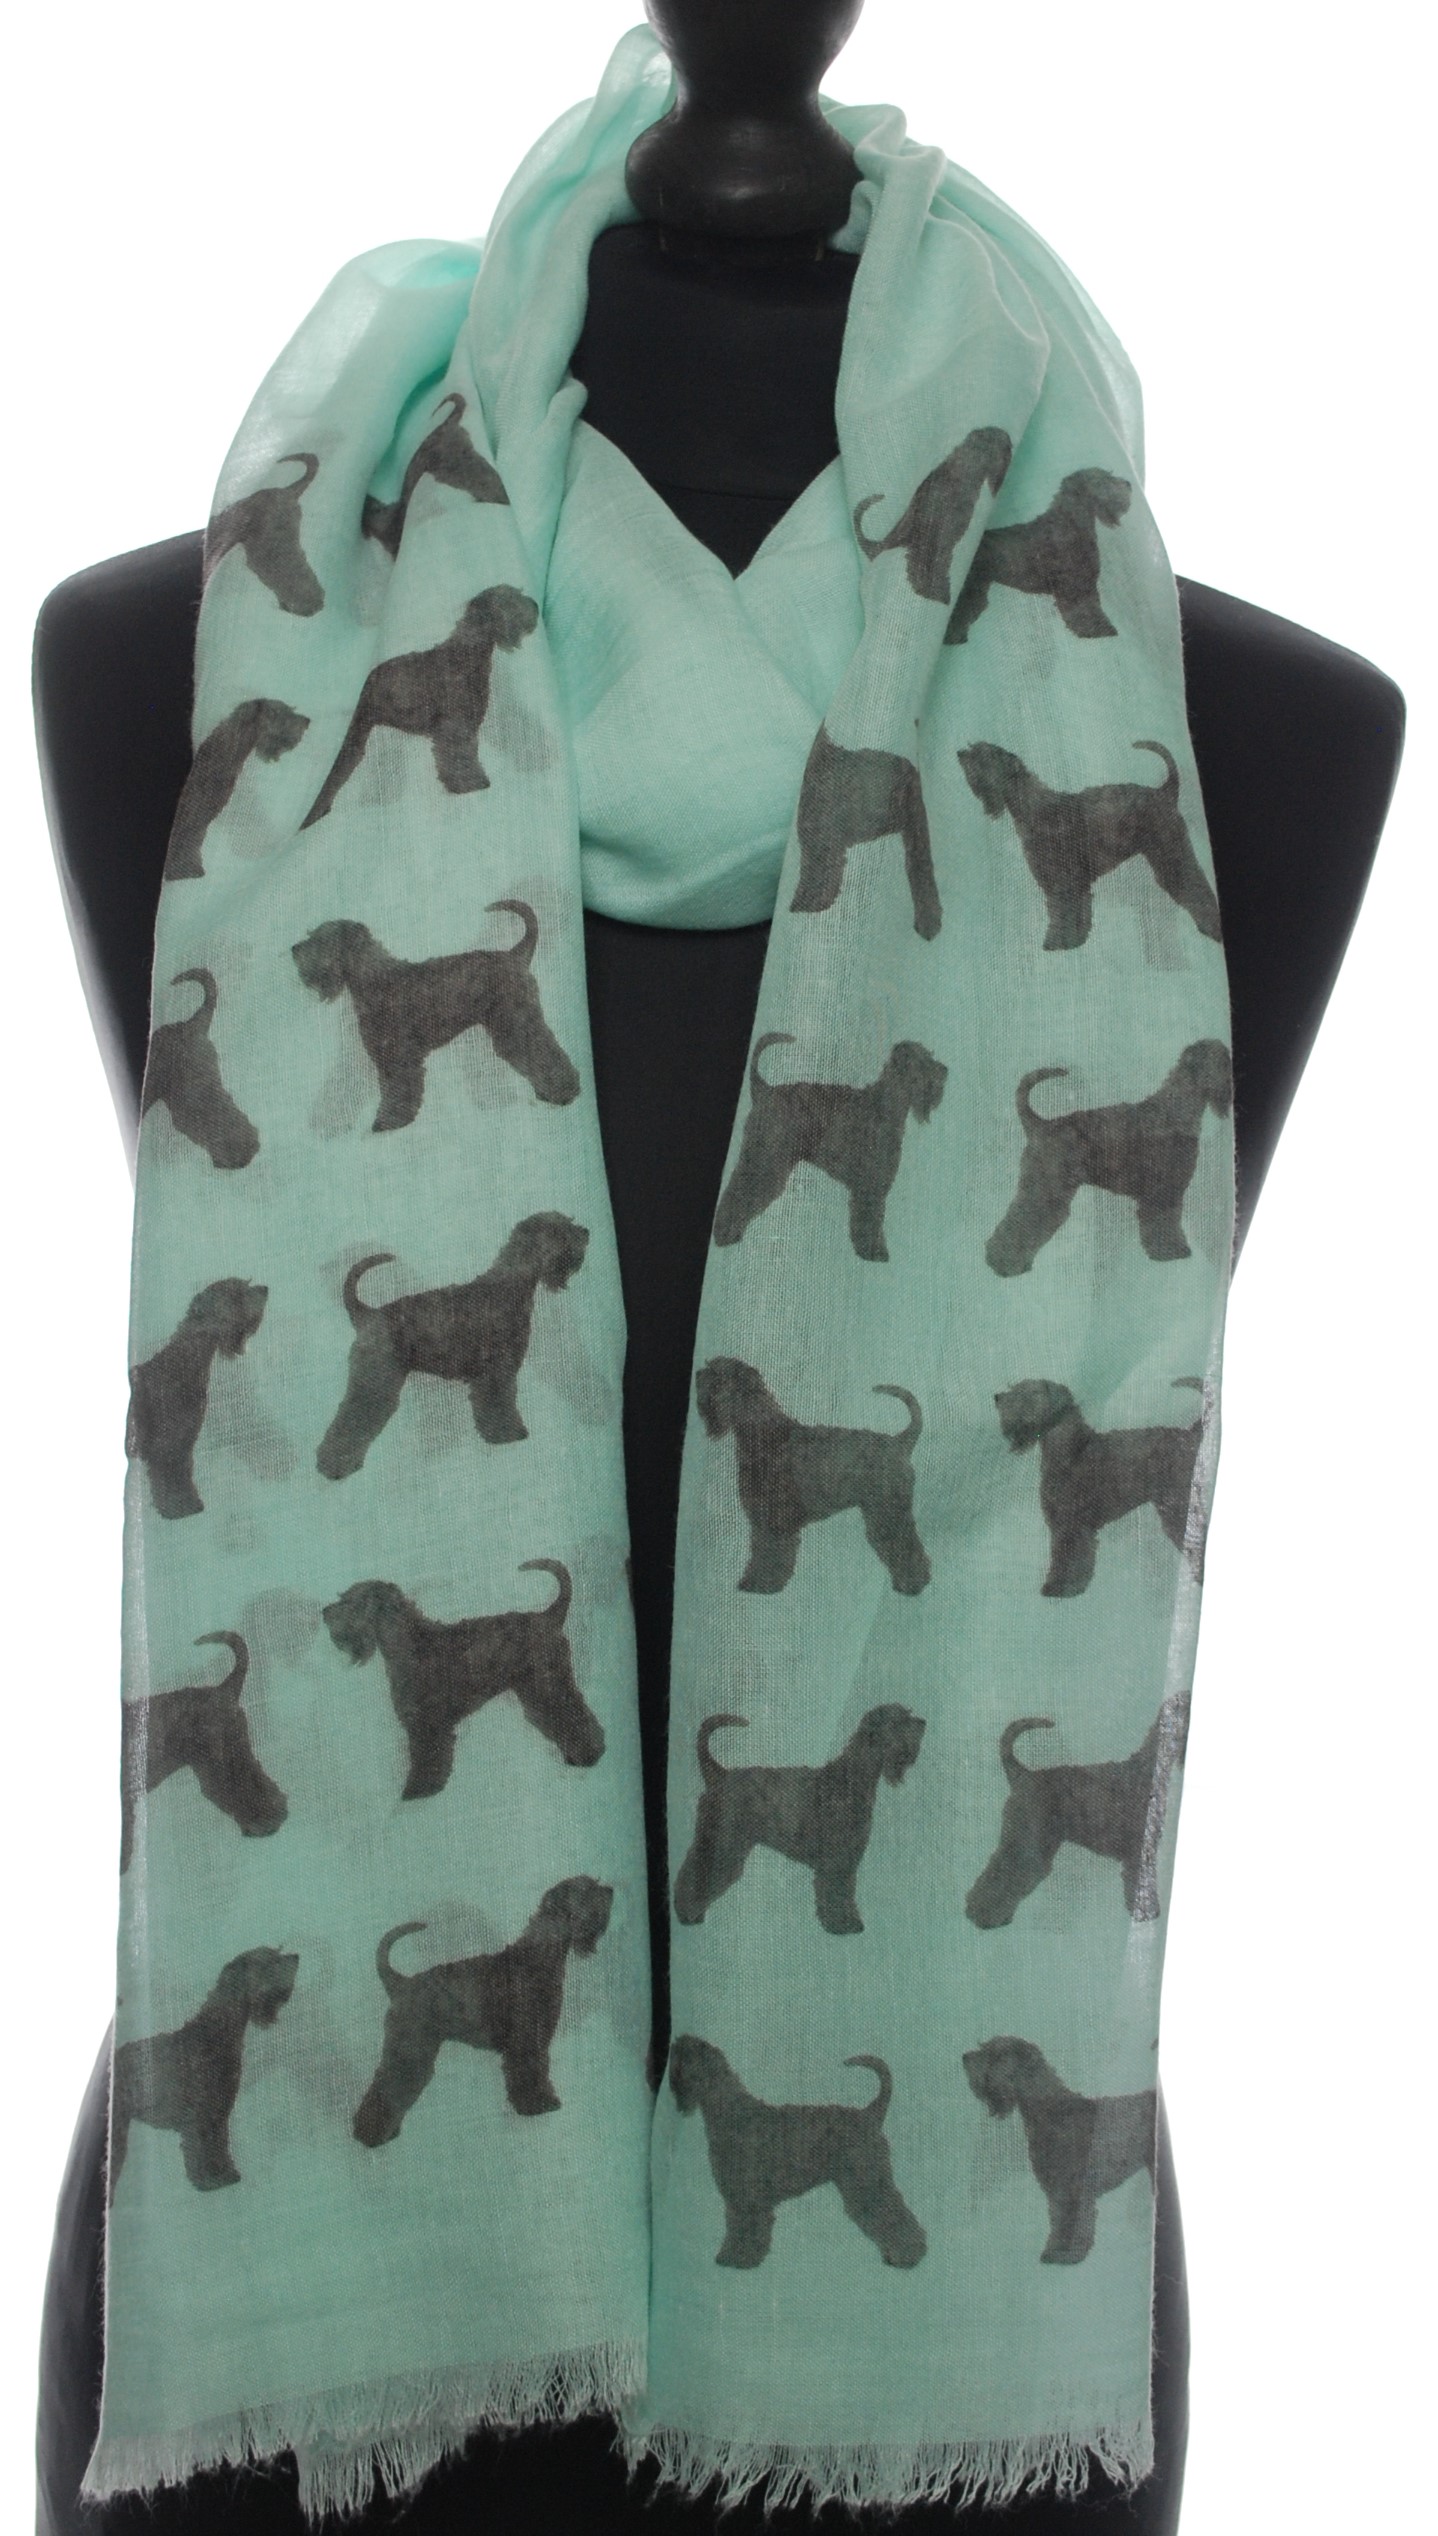 Wheaten Terrier hand printed ladies fashion scarf